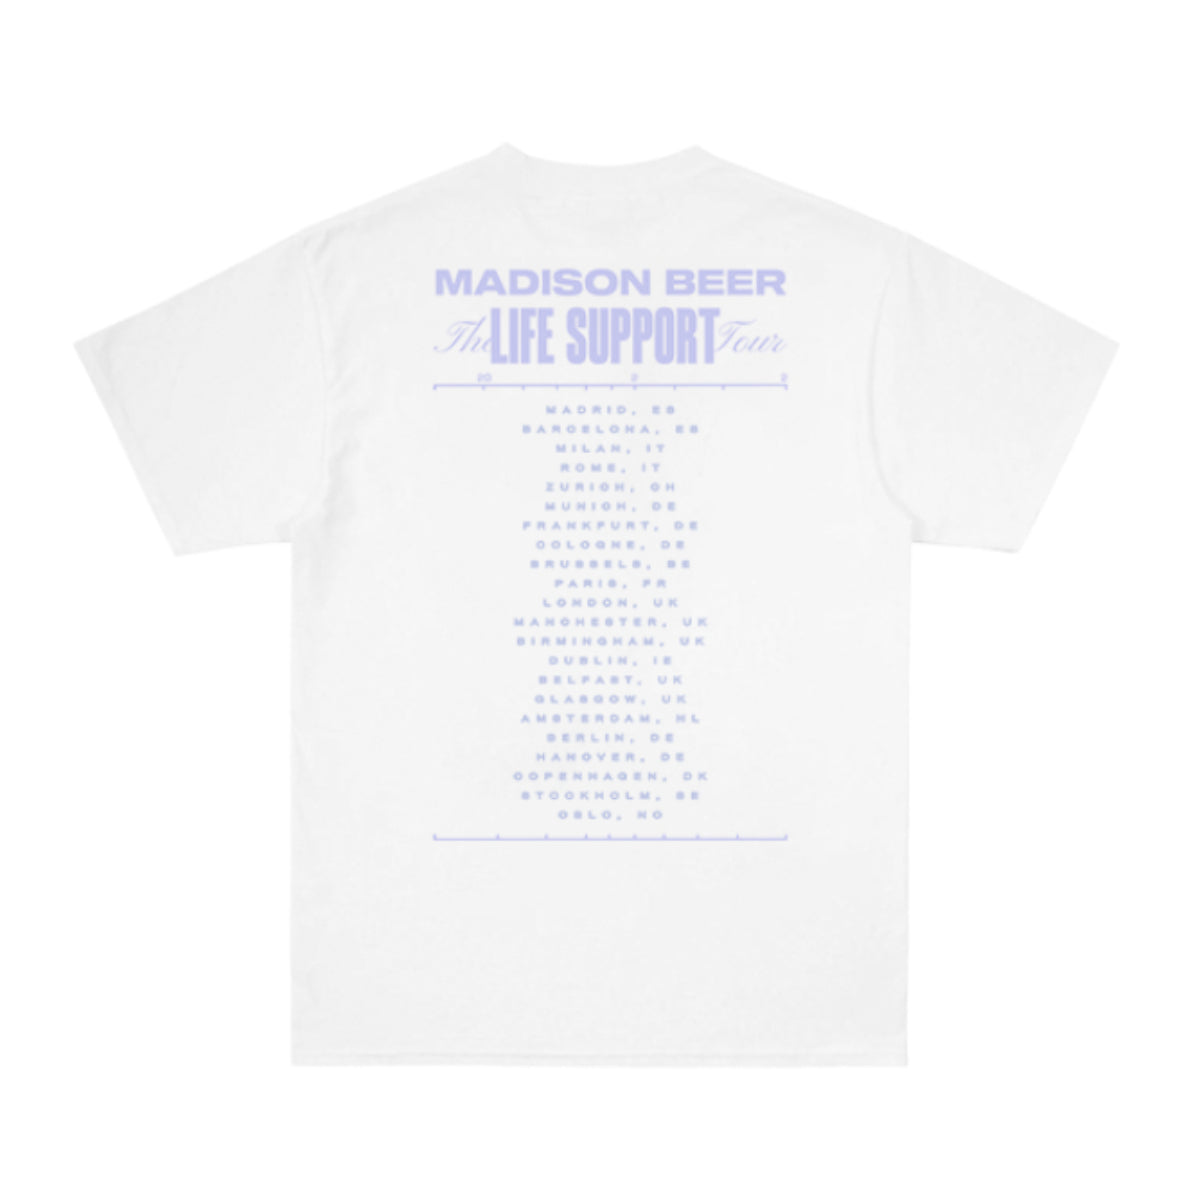 eksotisk Kommunisme subtropisk Life Support Tour EU Silhouette White T-Shirt – Madison Beer